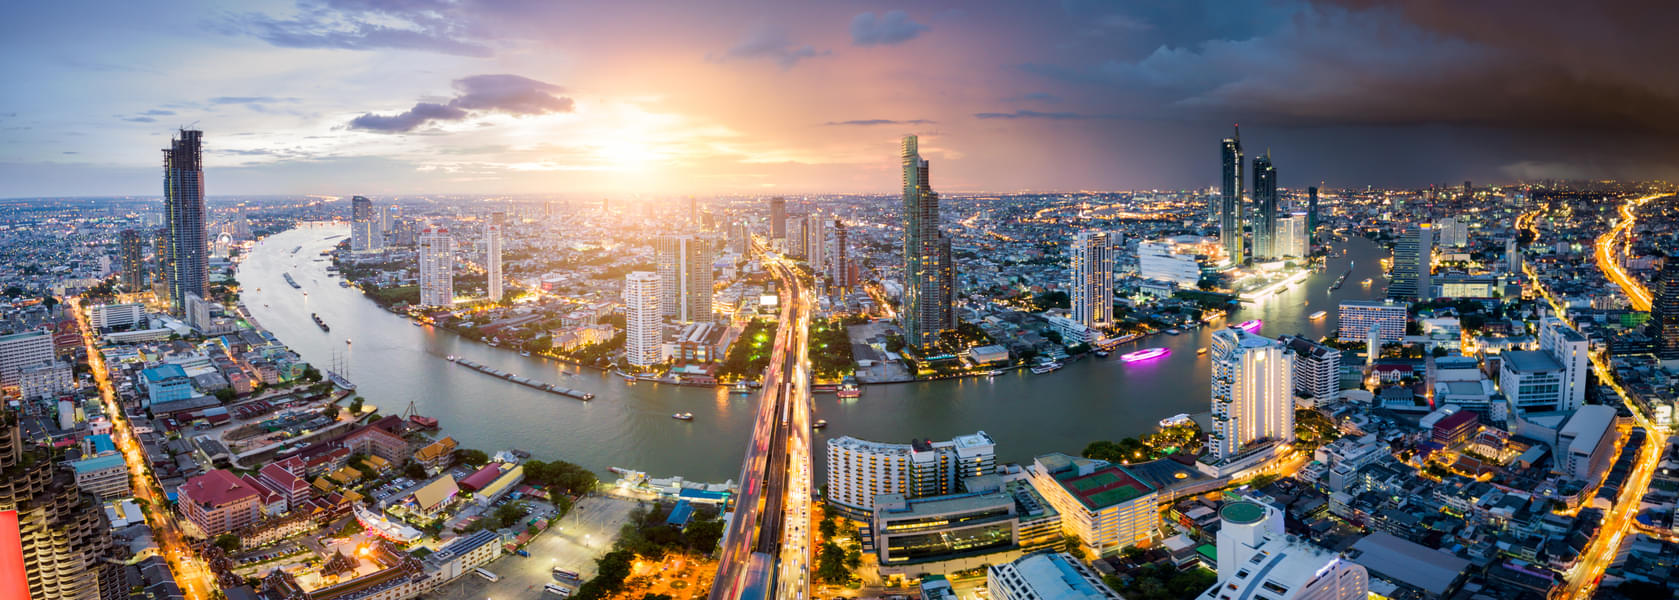 Bangkok Chiang Mai Phuket Tour Package Image